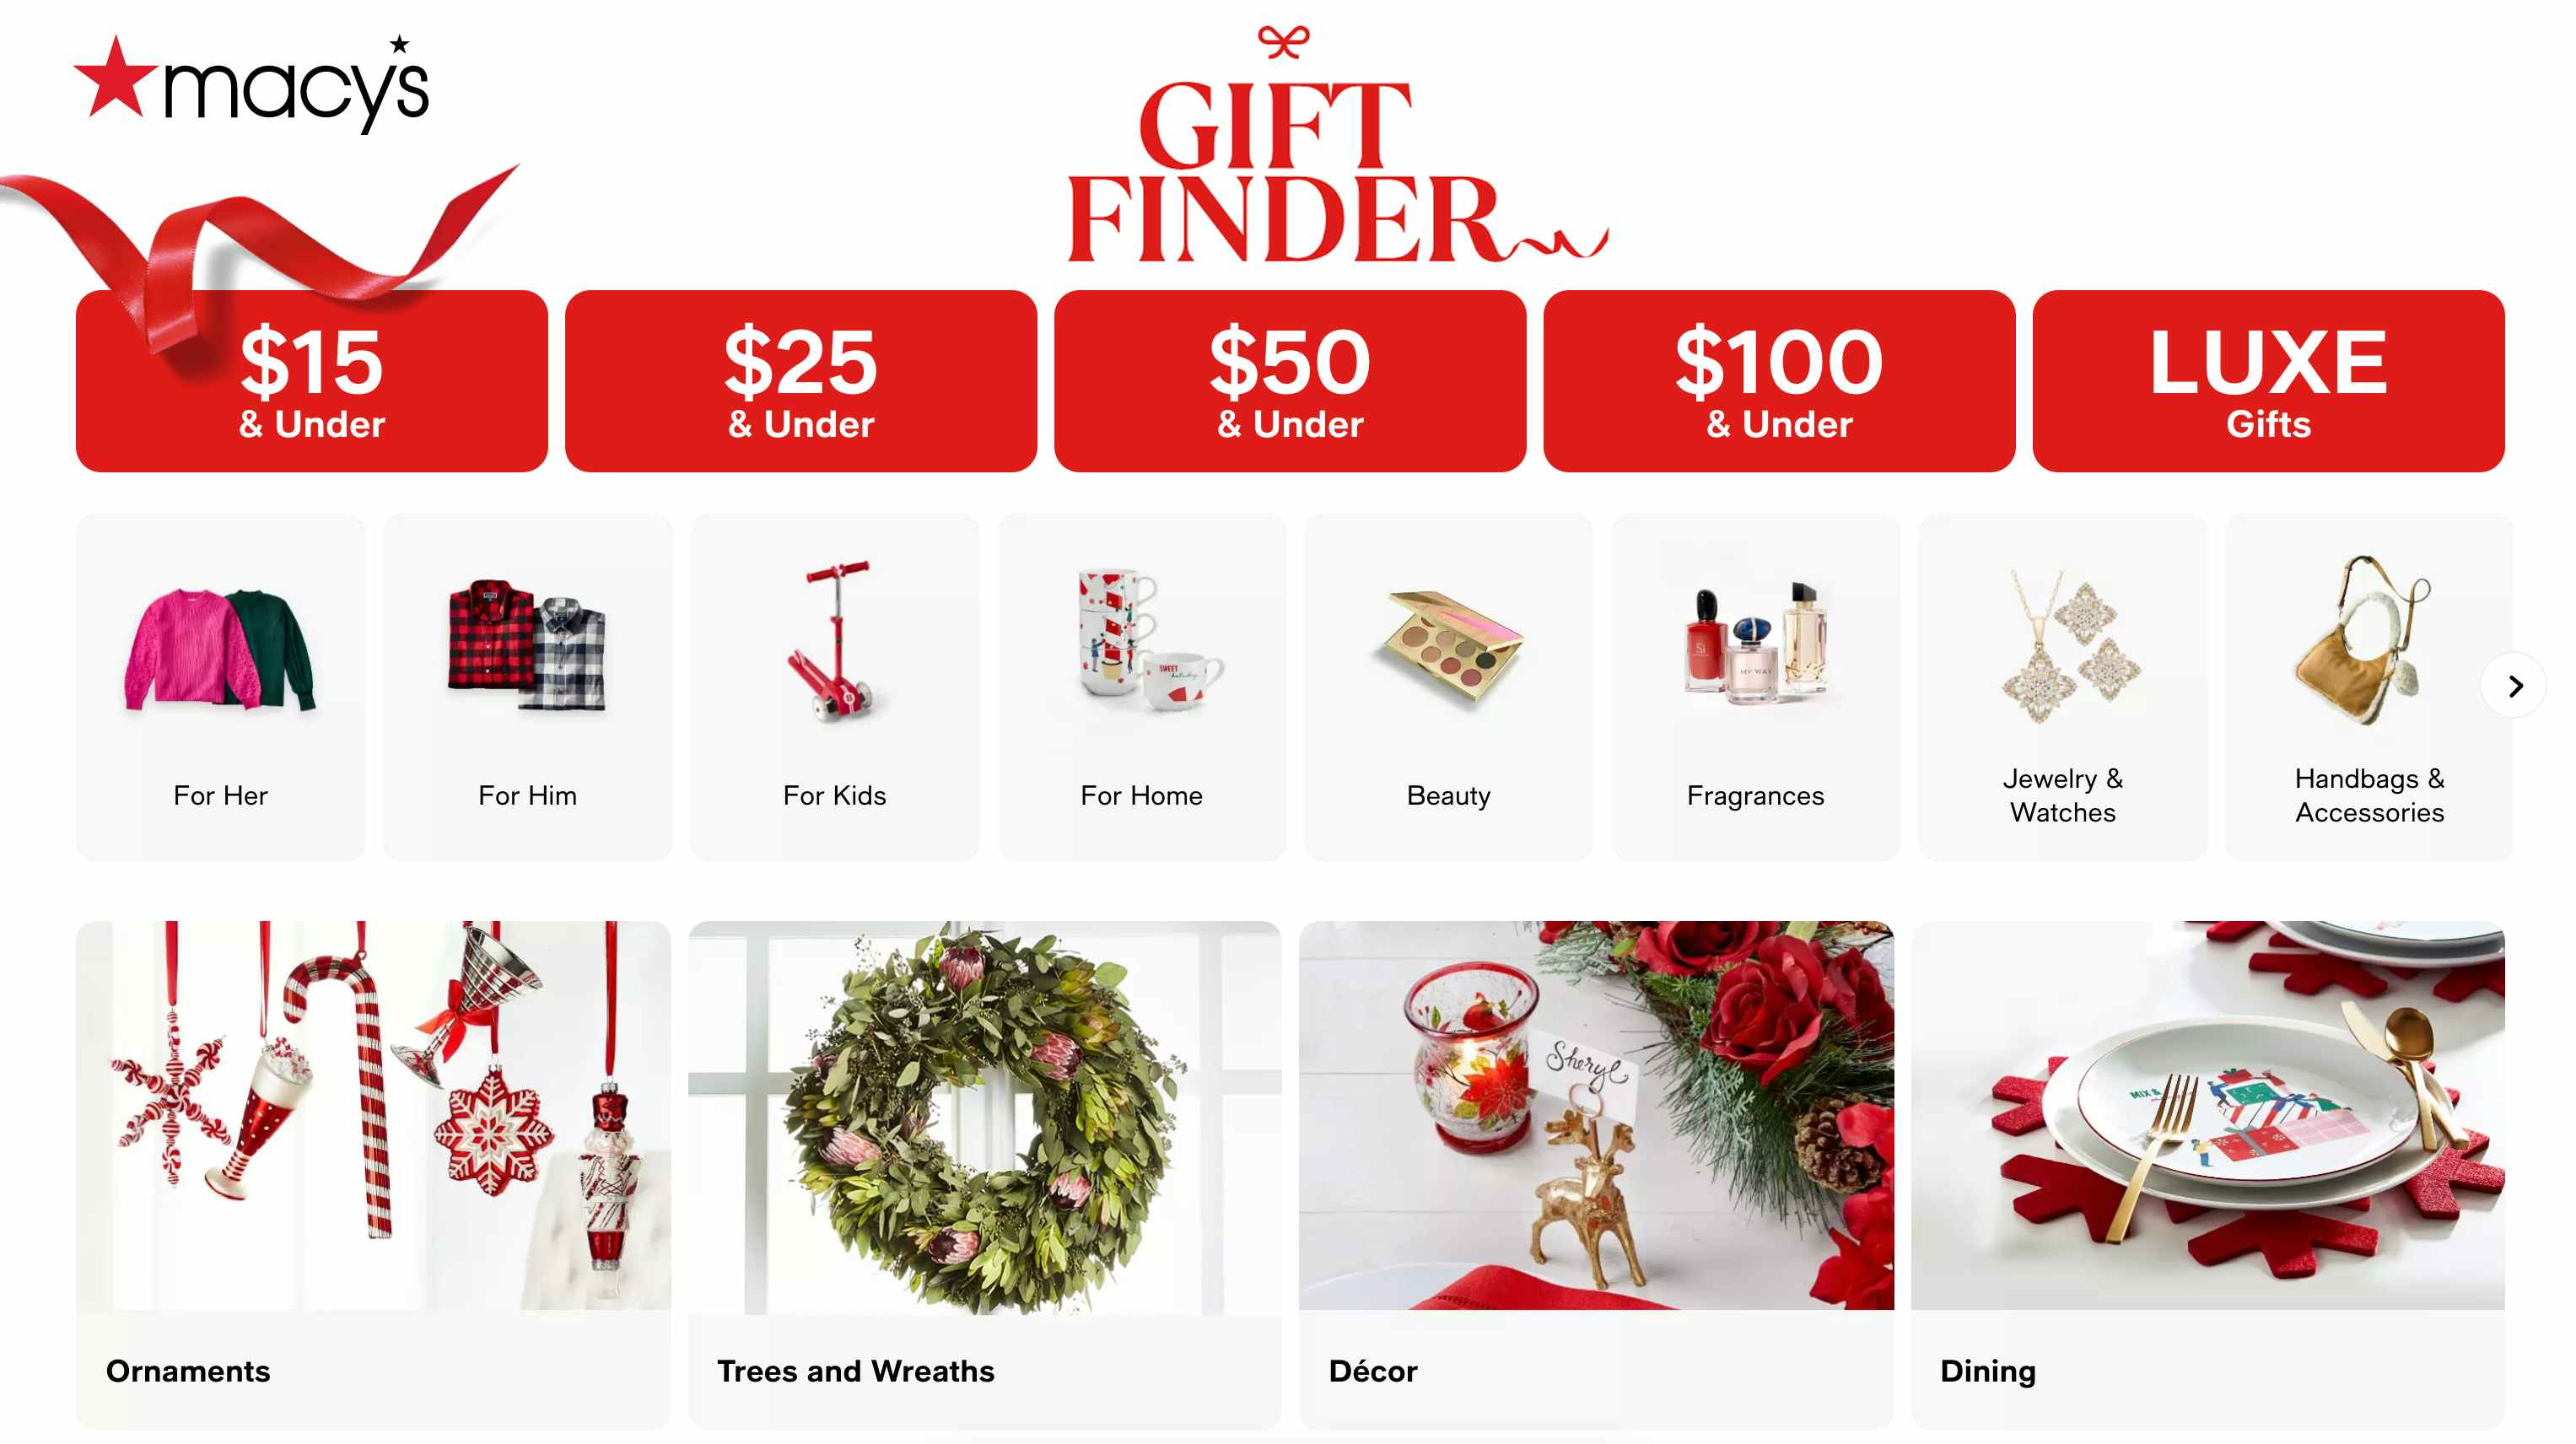 Macy's holiday gift guide webpage screenshot